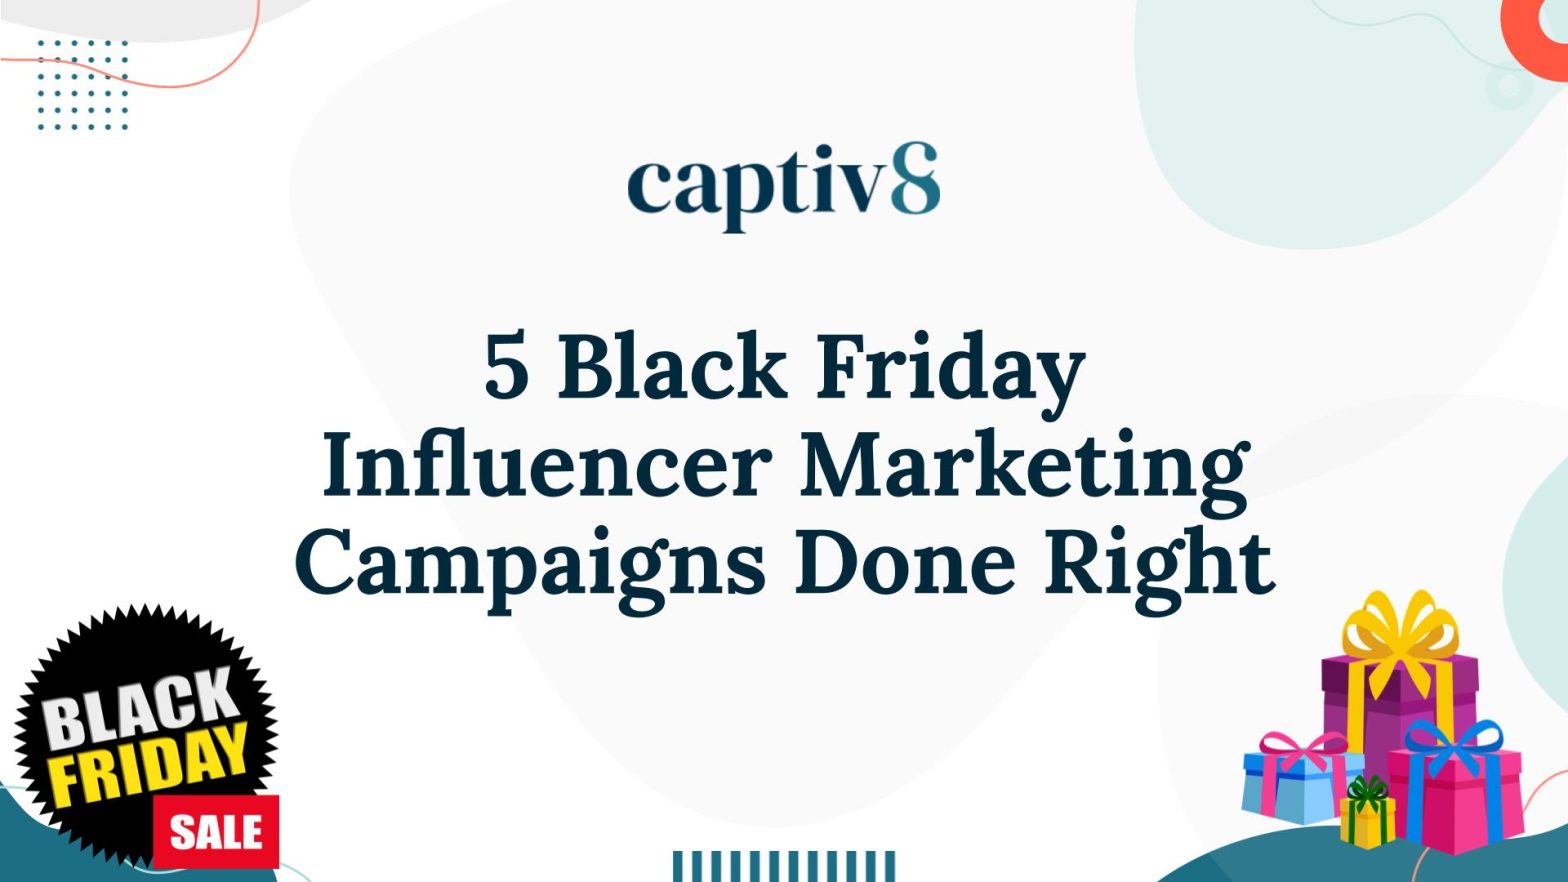 Black Friday Influencer Marketing in 2020 - Captiv8